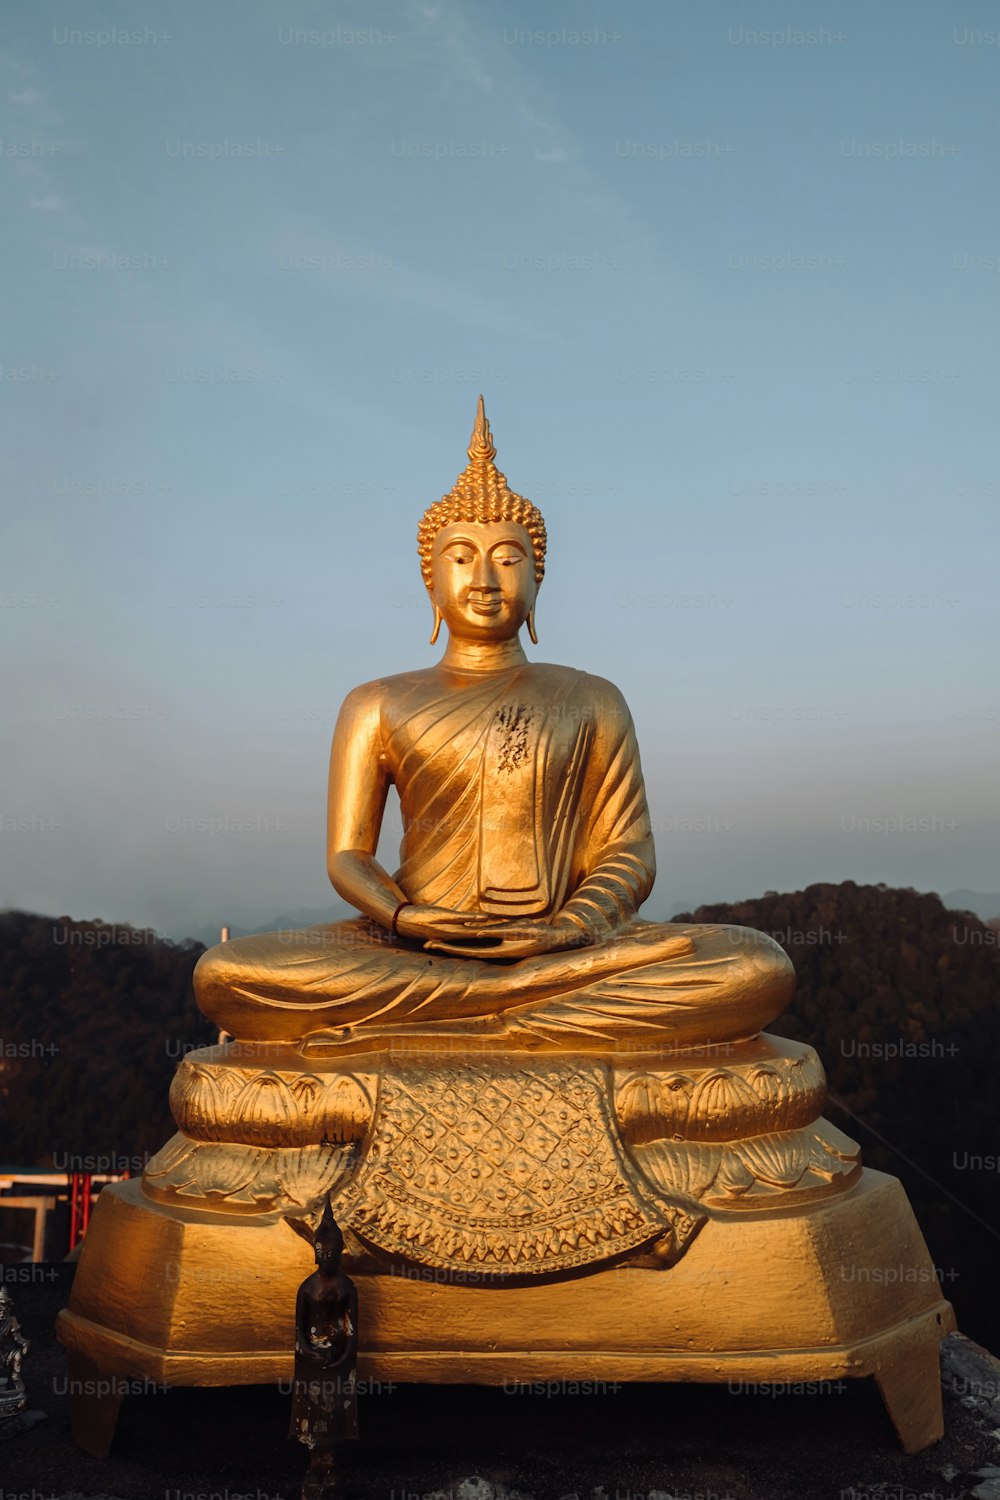 Una estatua dorada de Buda sentada en la cima de una roca